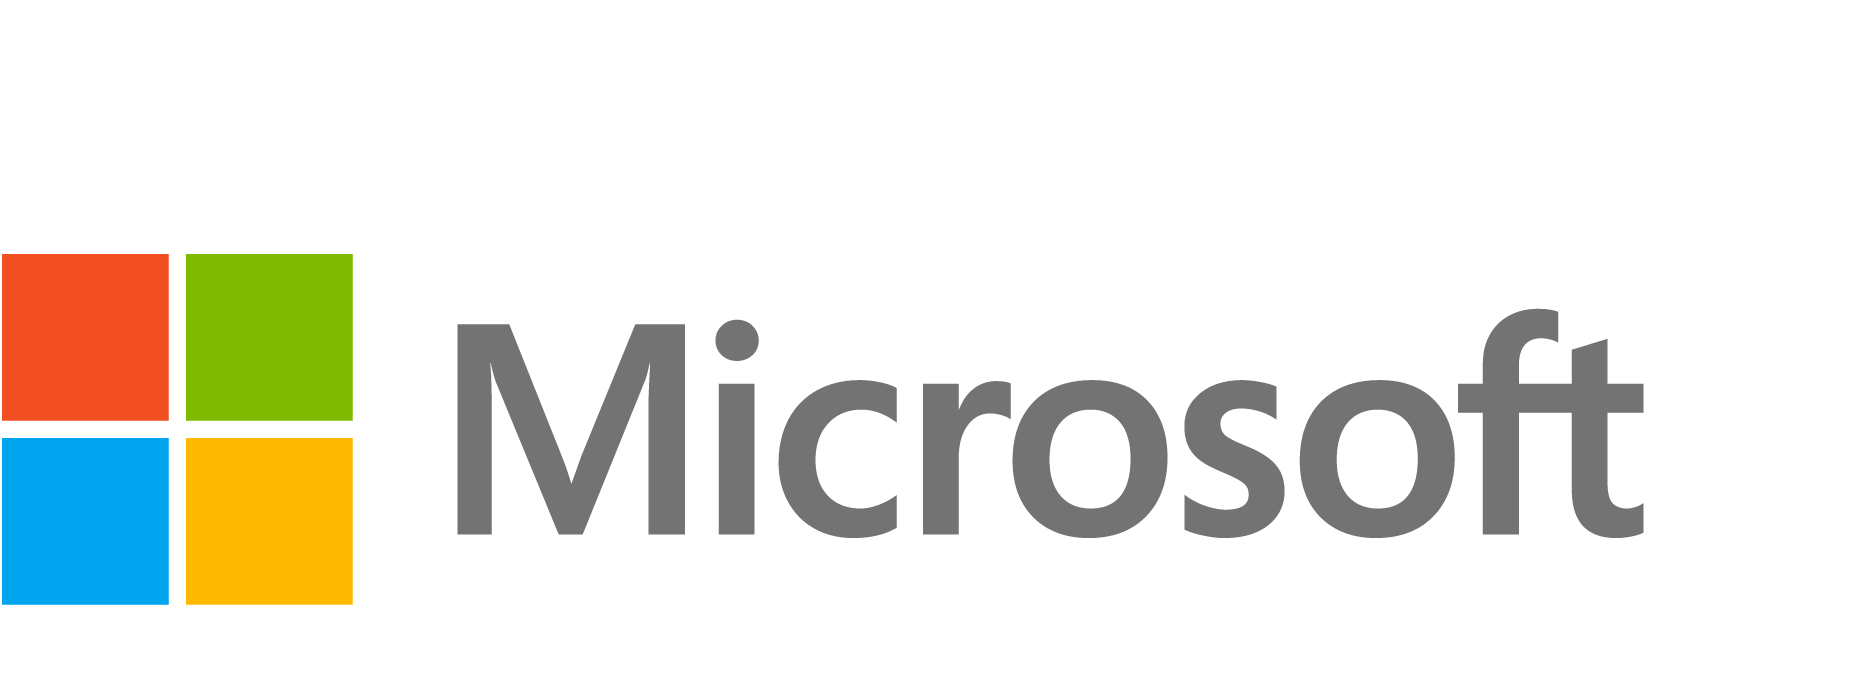 microsoft logo png transparent #2411